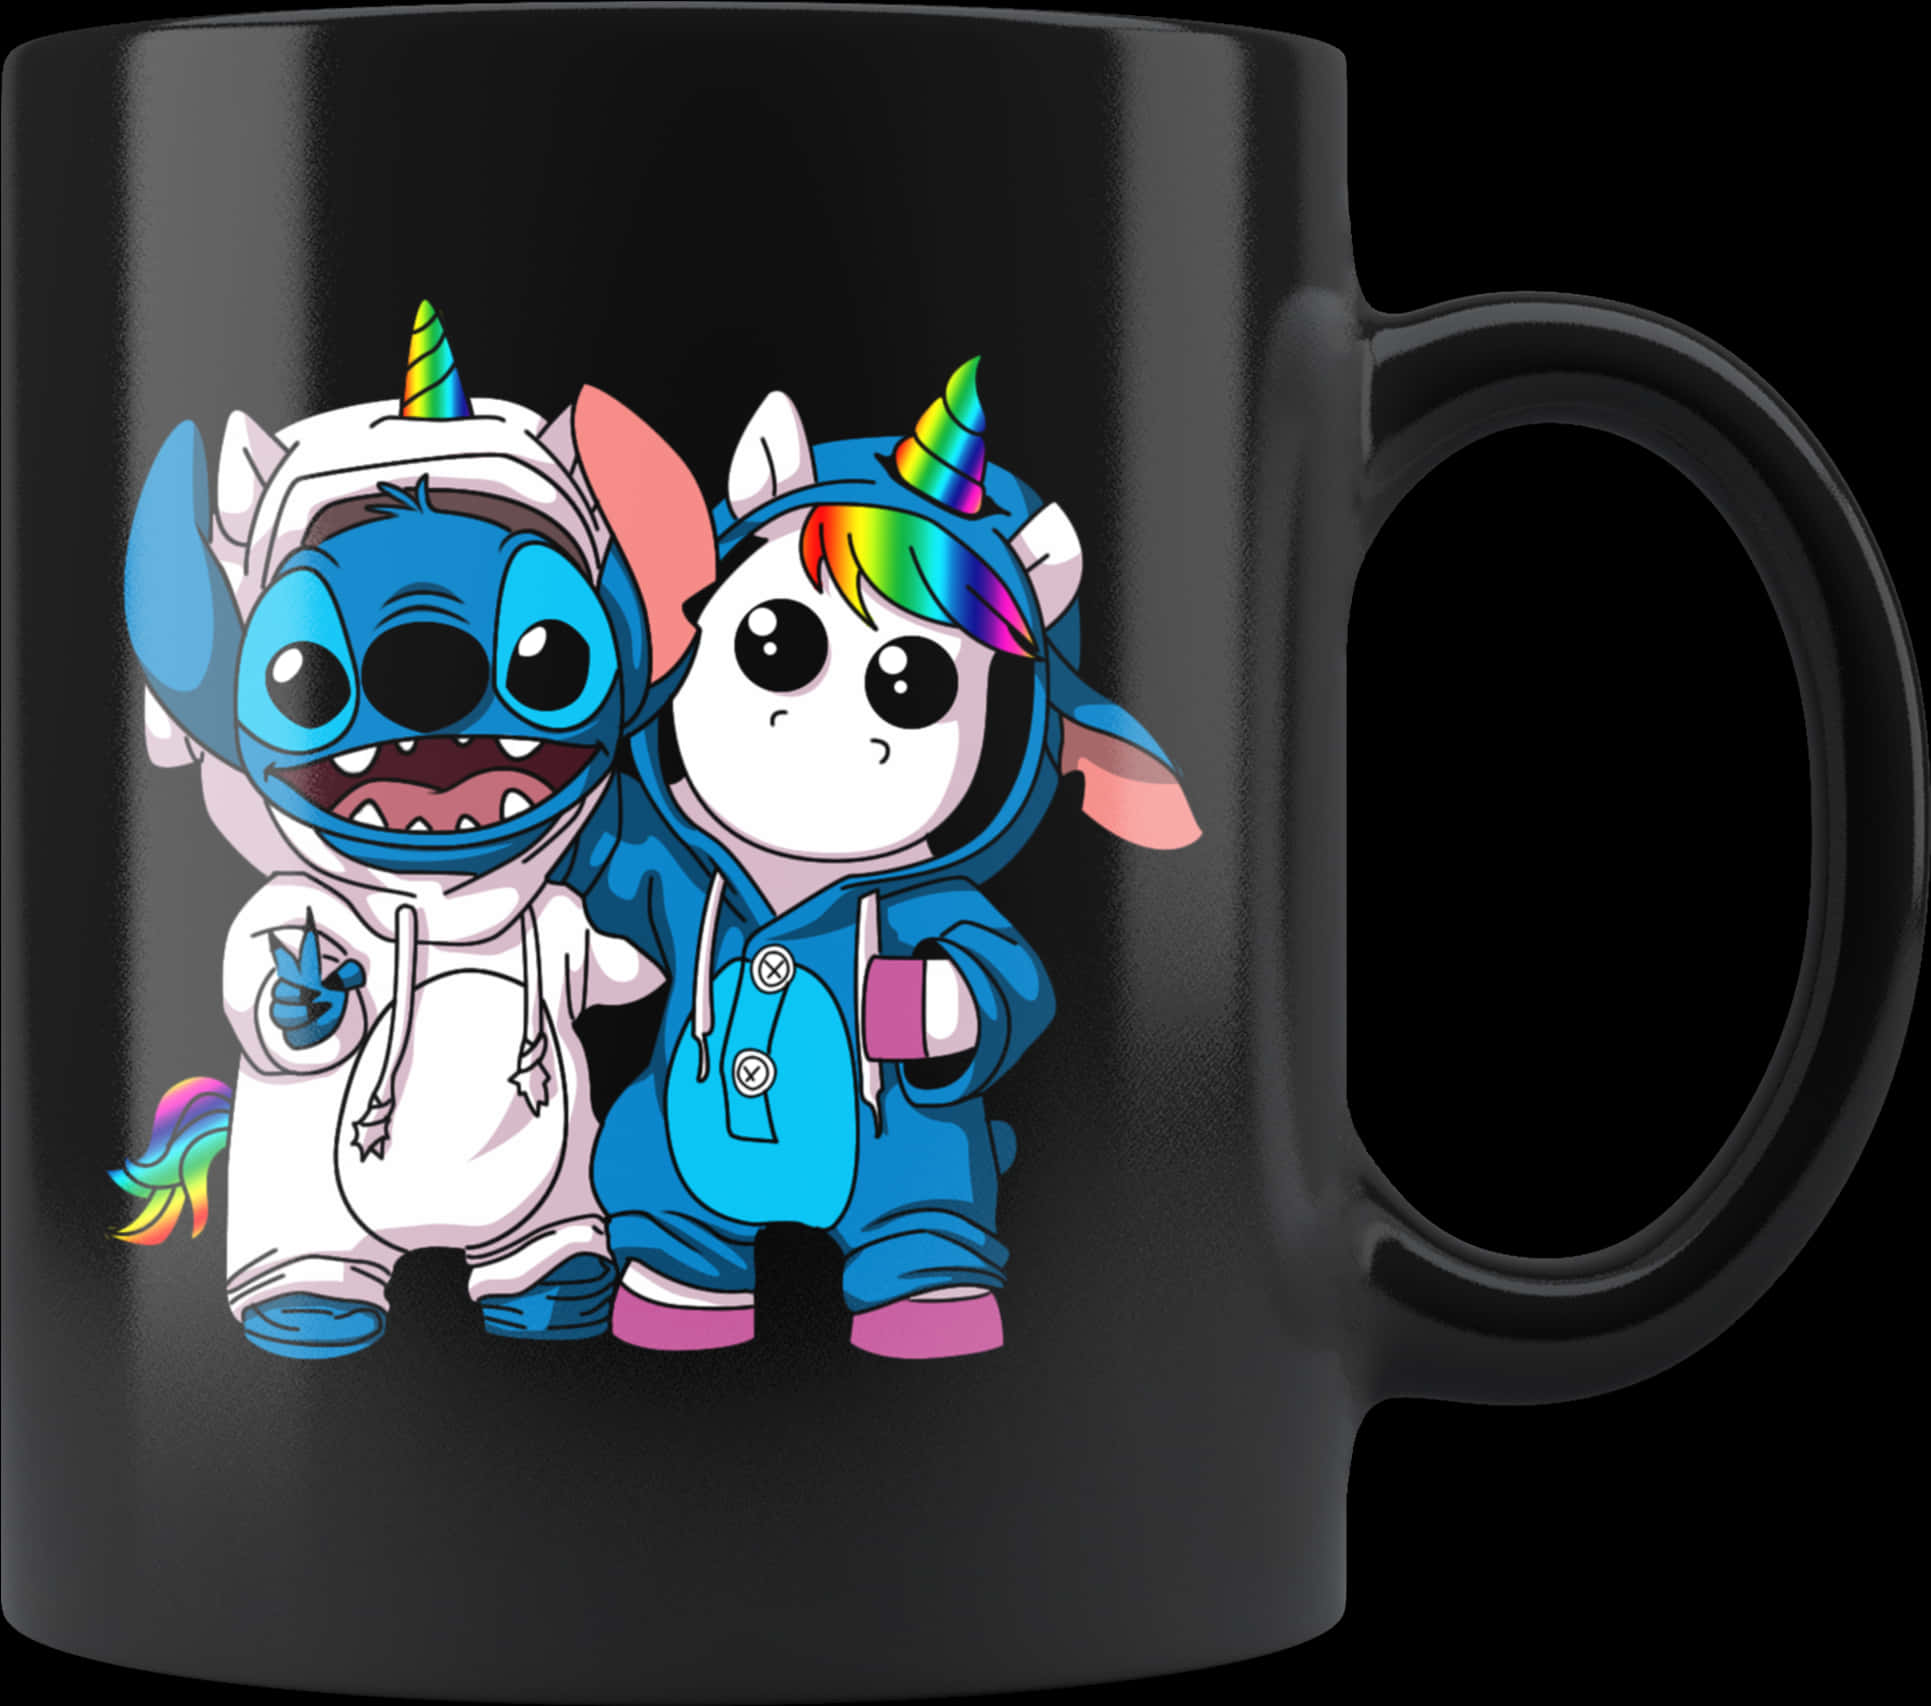 A Black Mug With Cartoon Characters On It